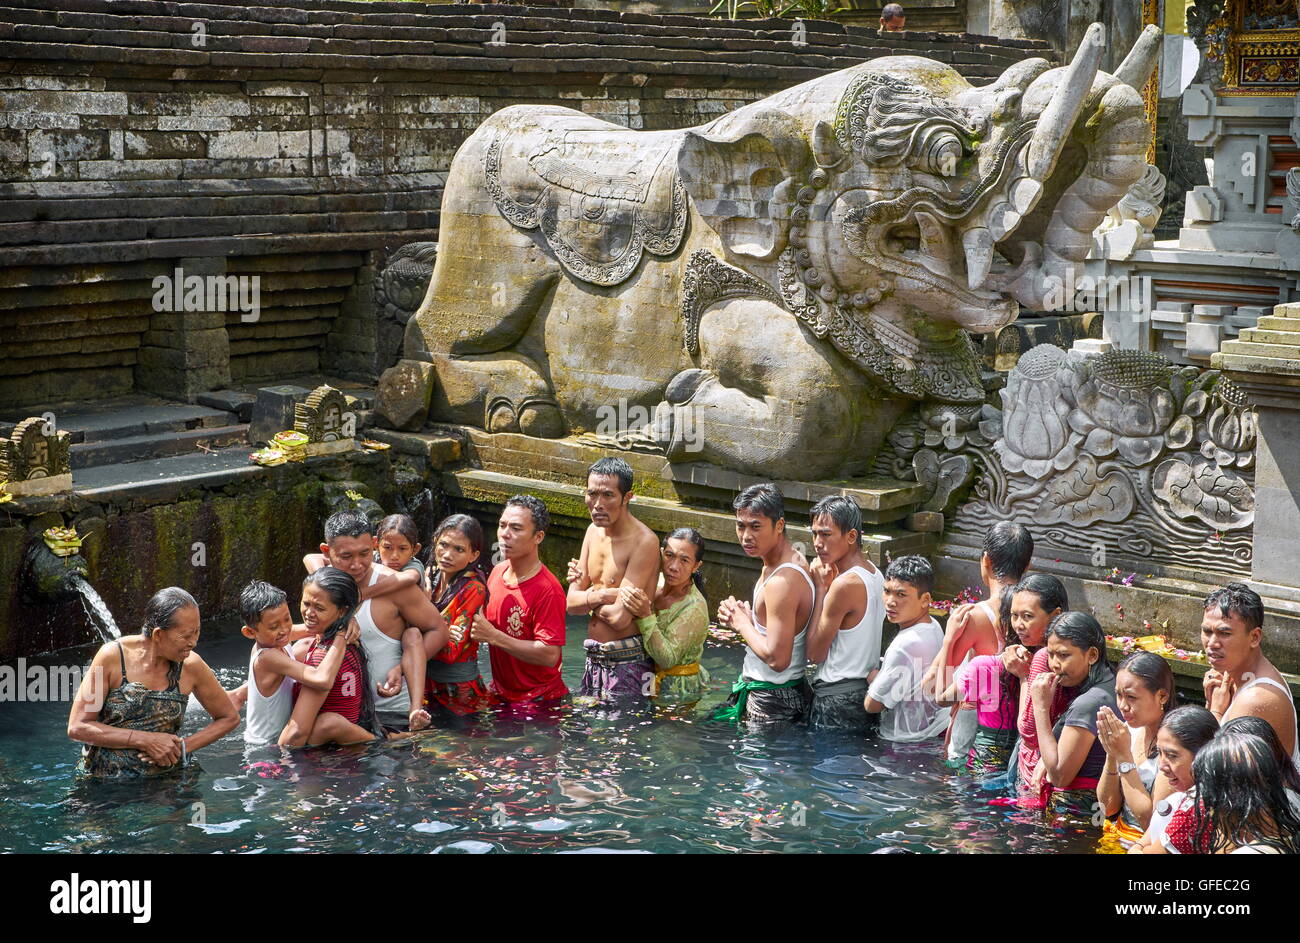 Bath in Tampaksiring sacred spring, Pura Tirta Empul Temple, Bali, Indonesia Stock Photo